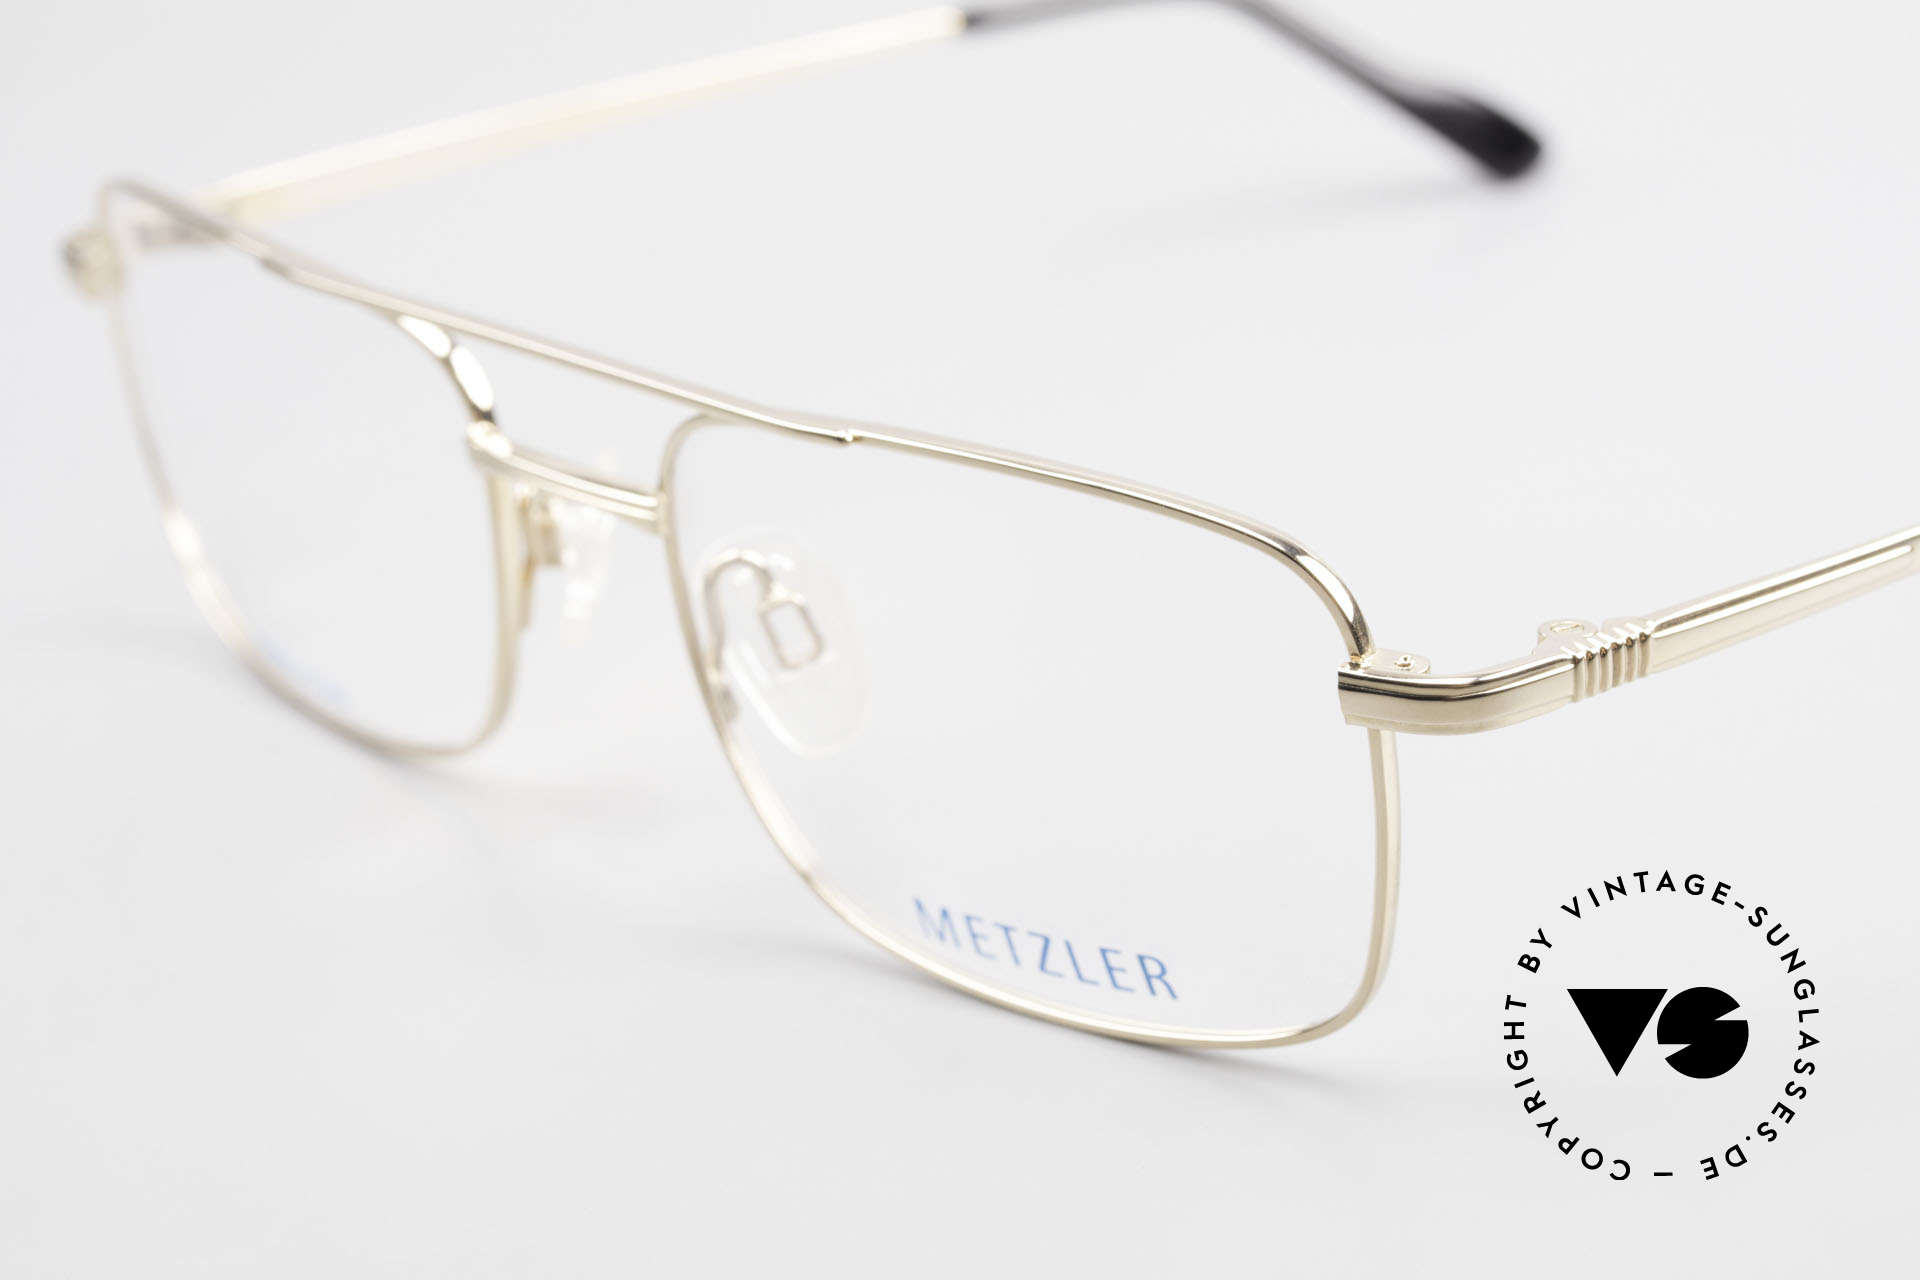 Metzler 1680 90's Titan Frame Gold Plated, never worn (like all our rare vintage 90s eyeglasses), Made for Men